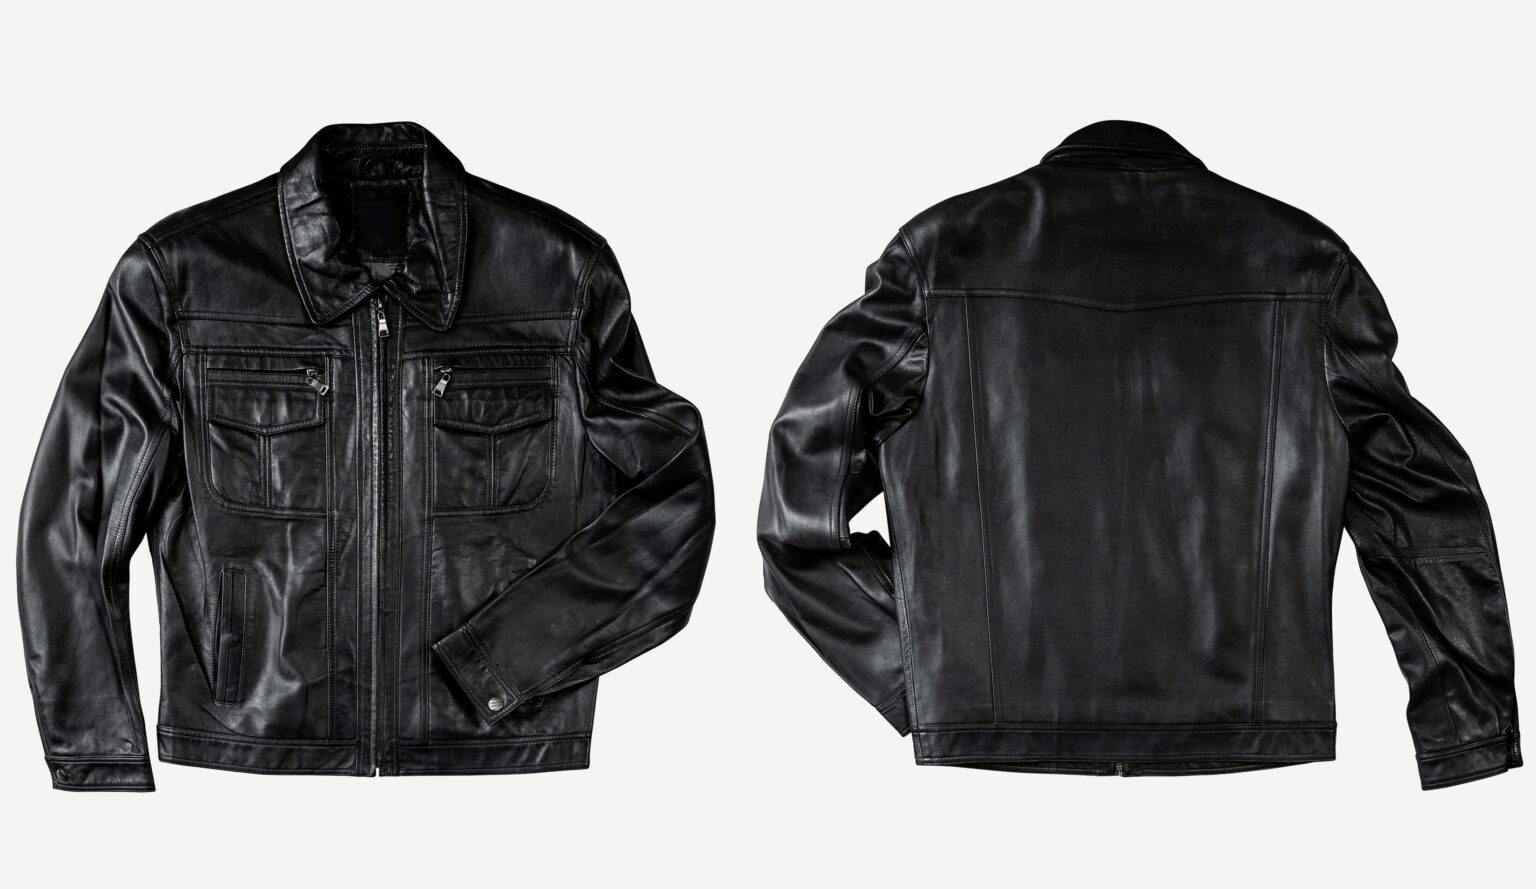 Black leather jackets